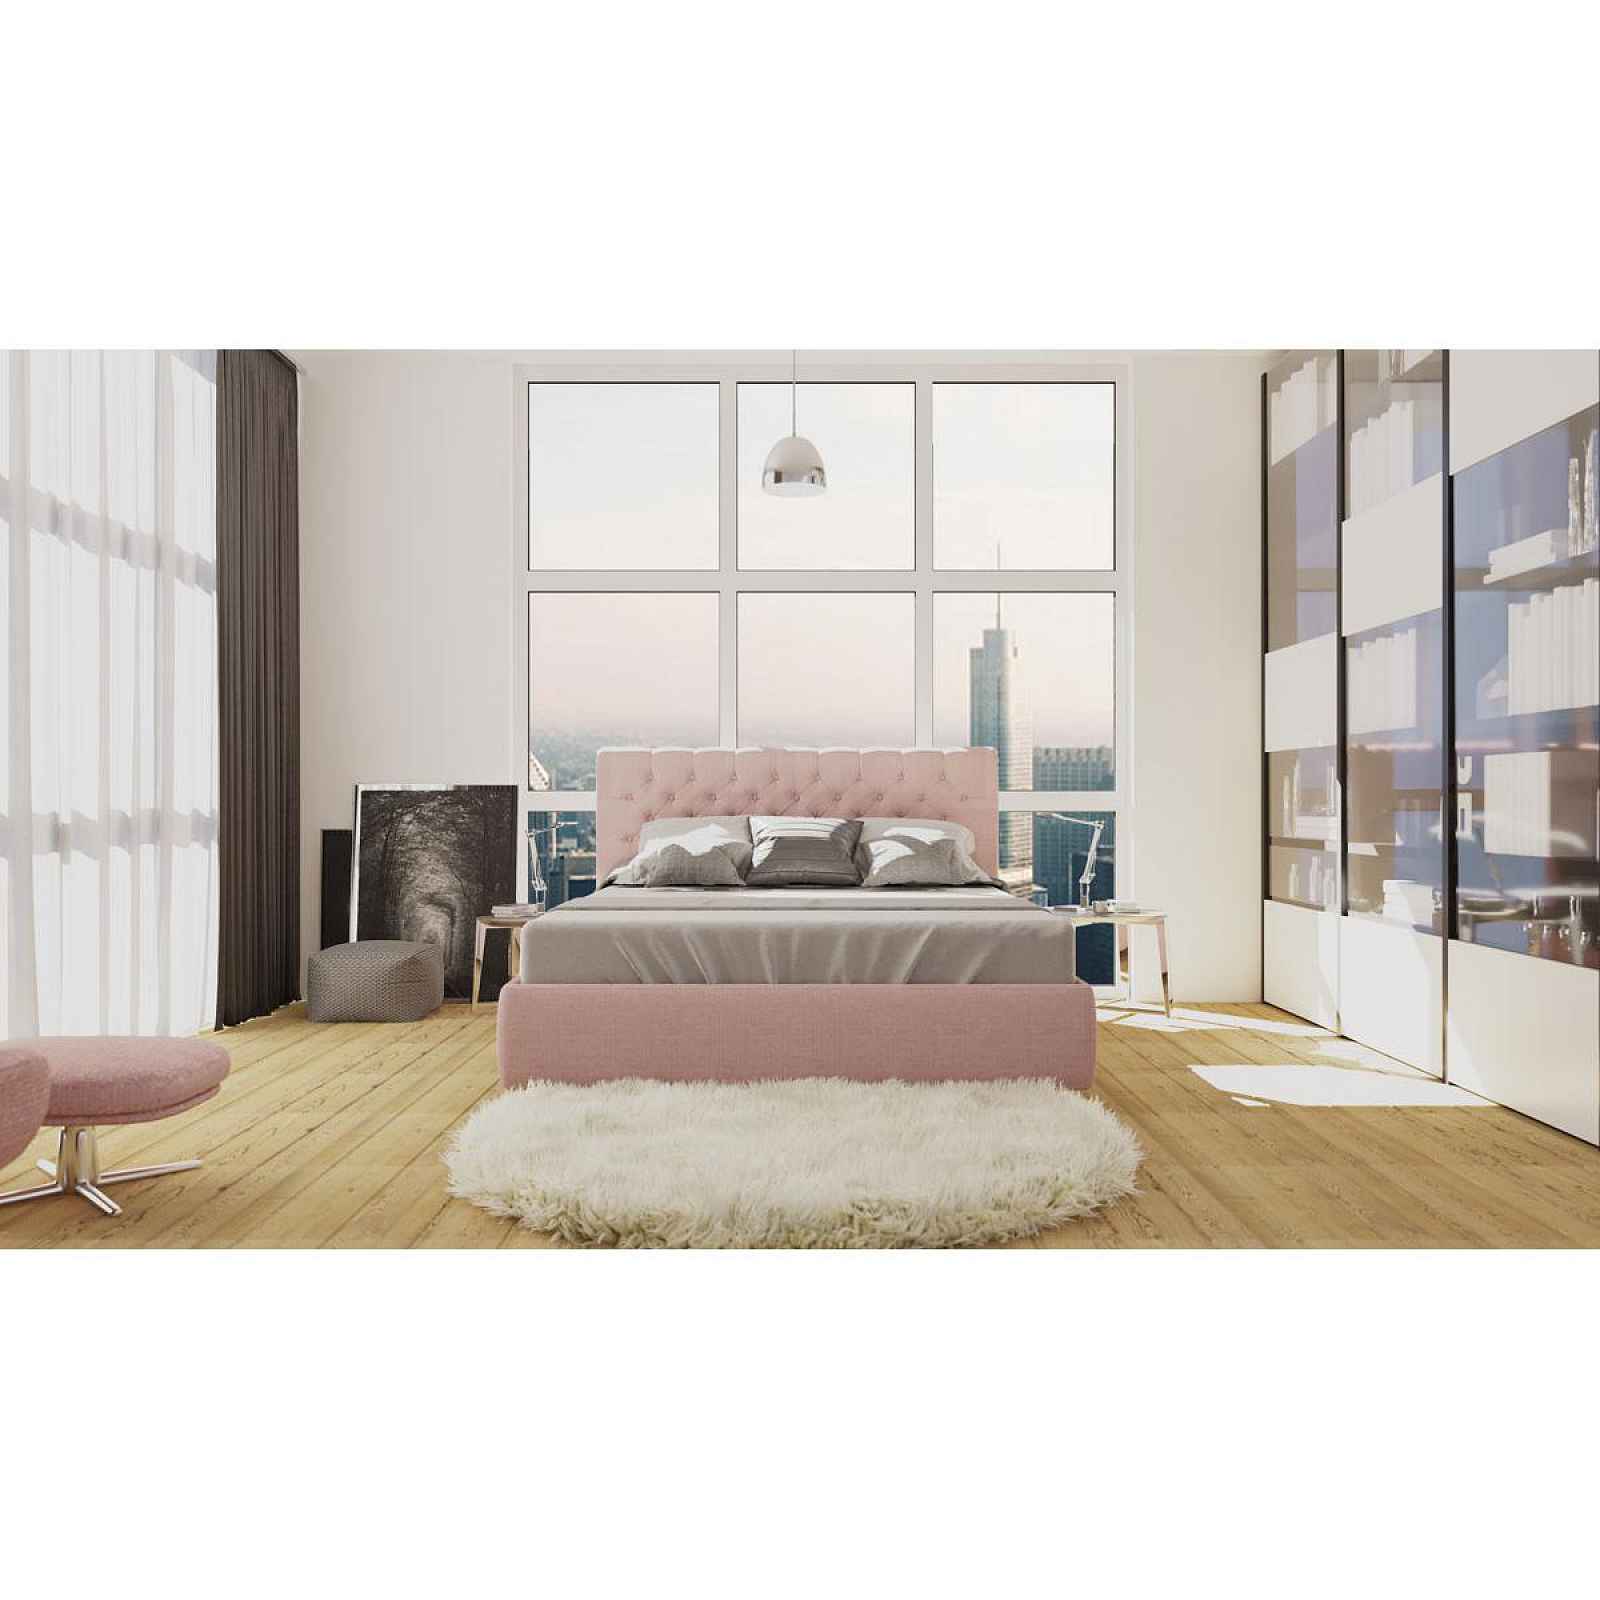 Enzio ORLANDO Frame 180 x 200 cm Sofia Powder Pink 08 elegantní čalouněná postel